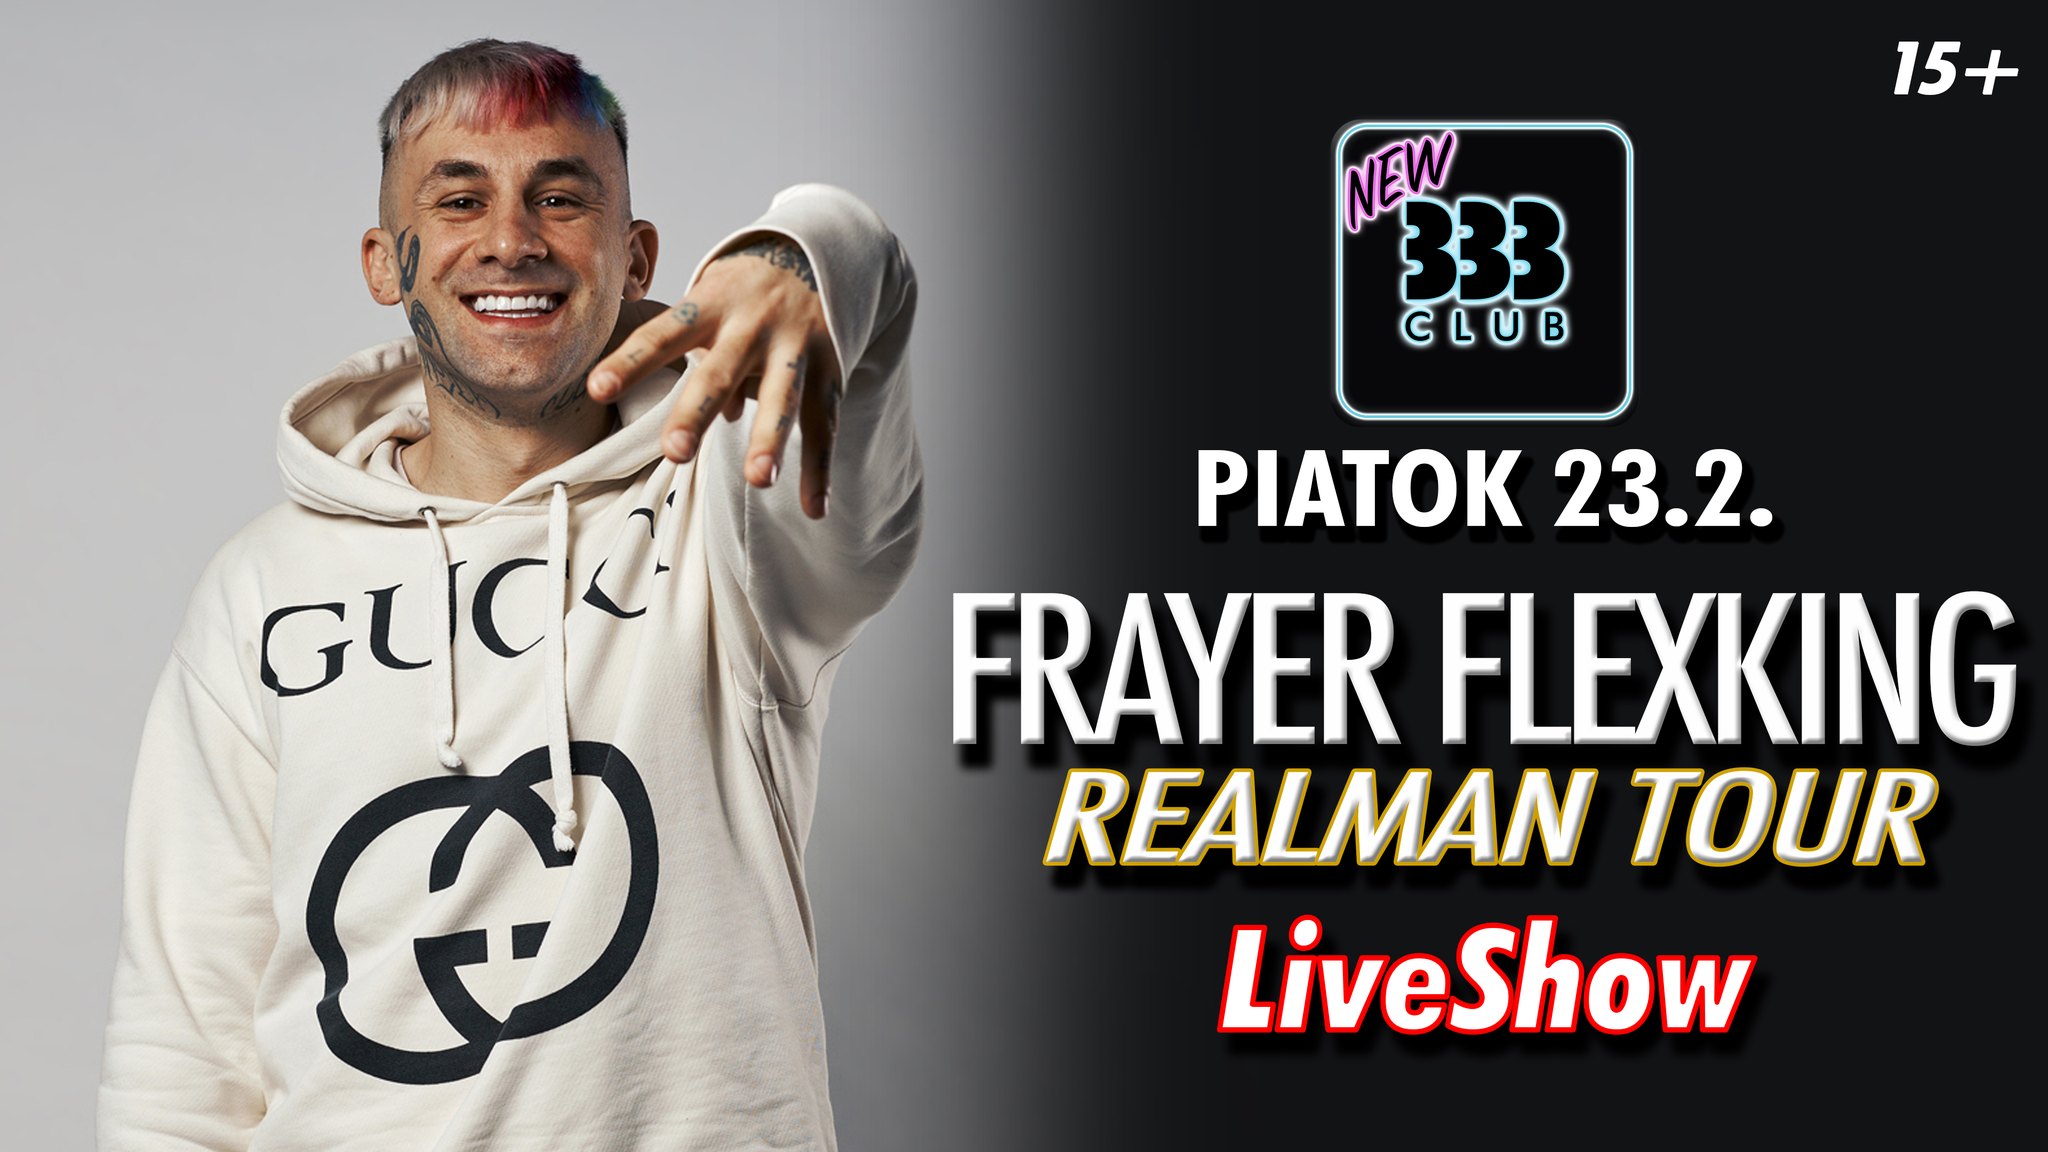 👑 FRAYER FLEXKING LiveShow @ NEW 333 👑 23.2.